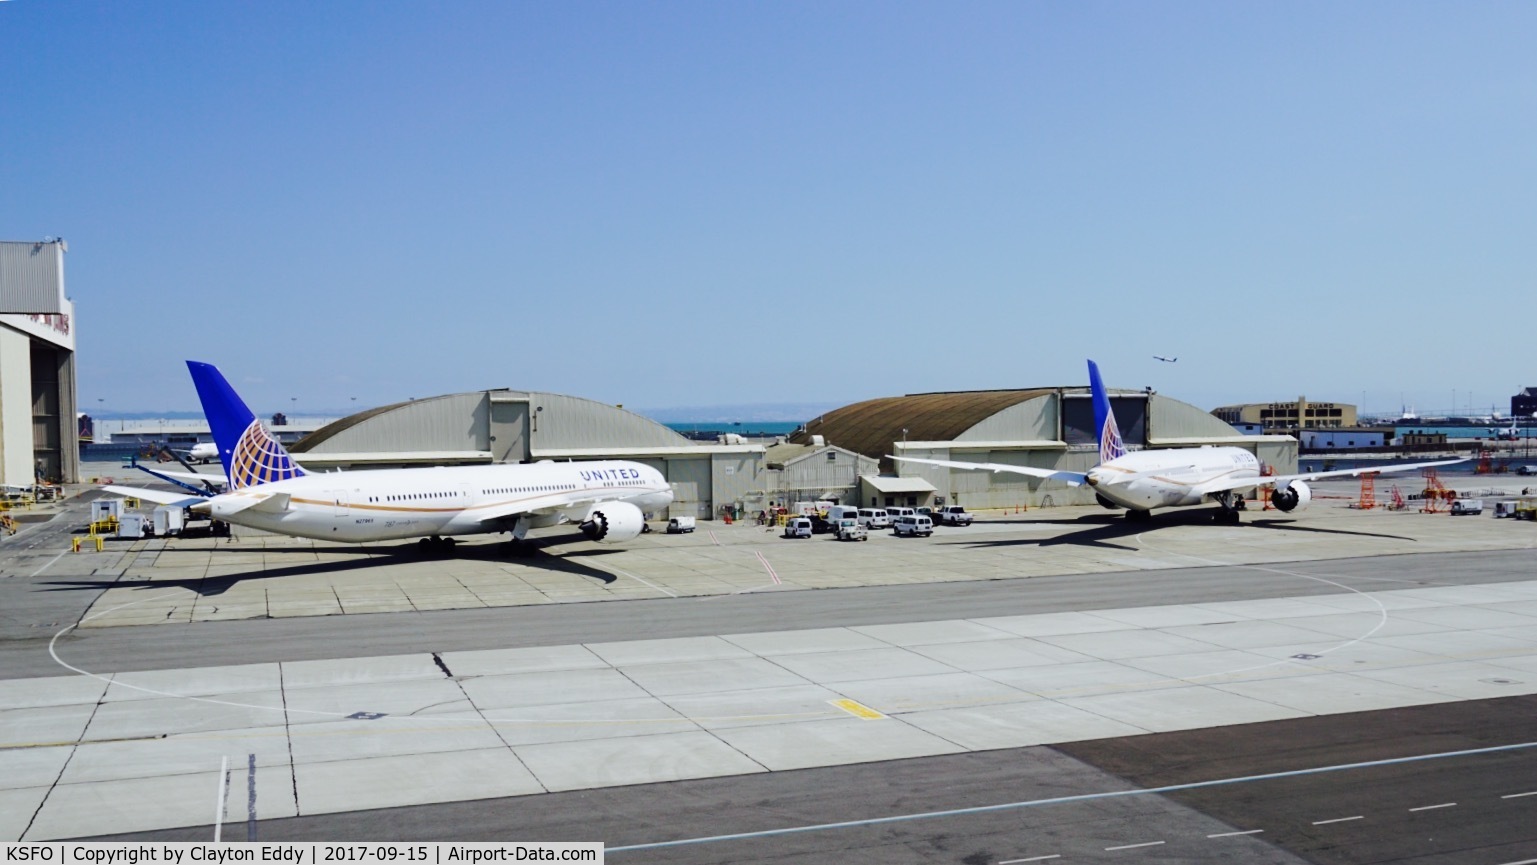 San Francisco International Airport (SFO) - United Airlines maintenance base. 2017.